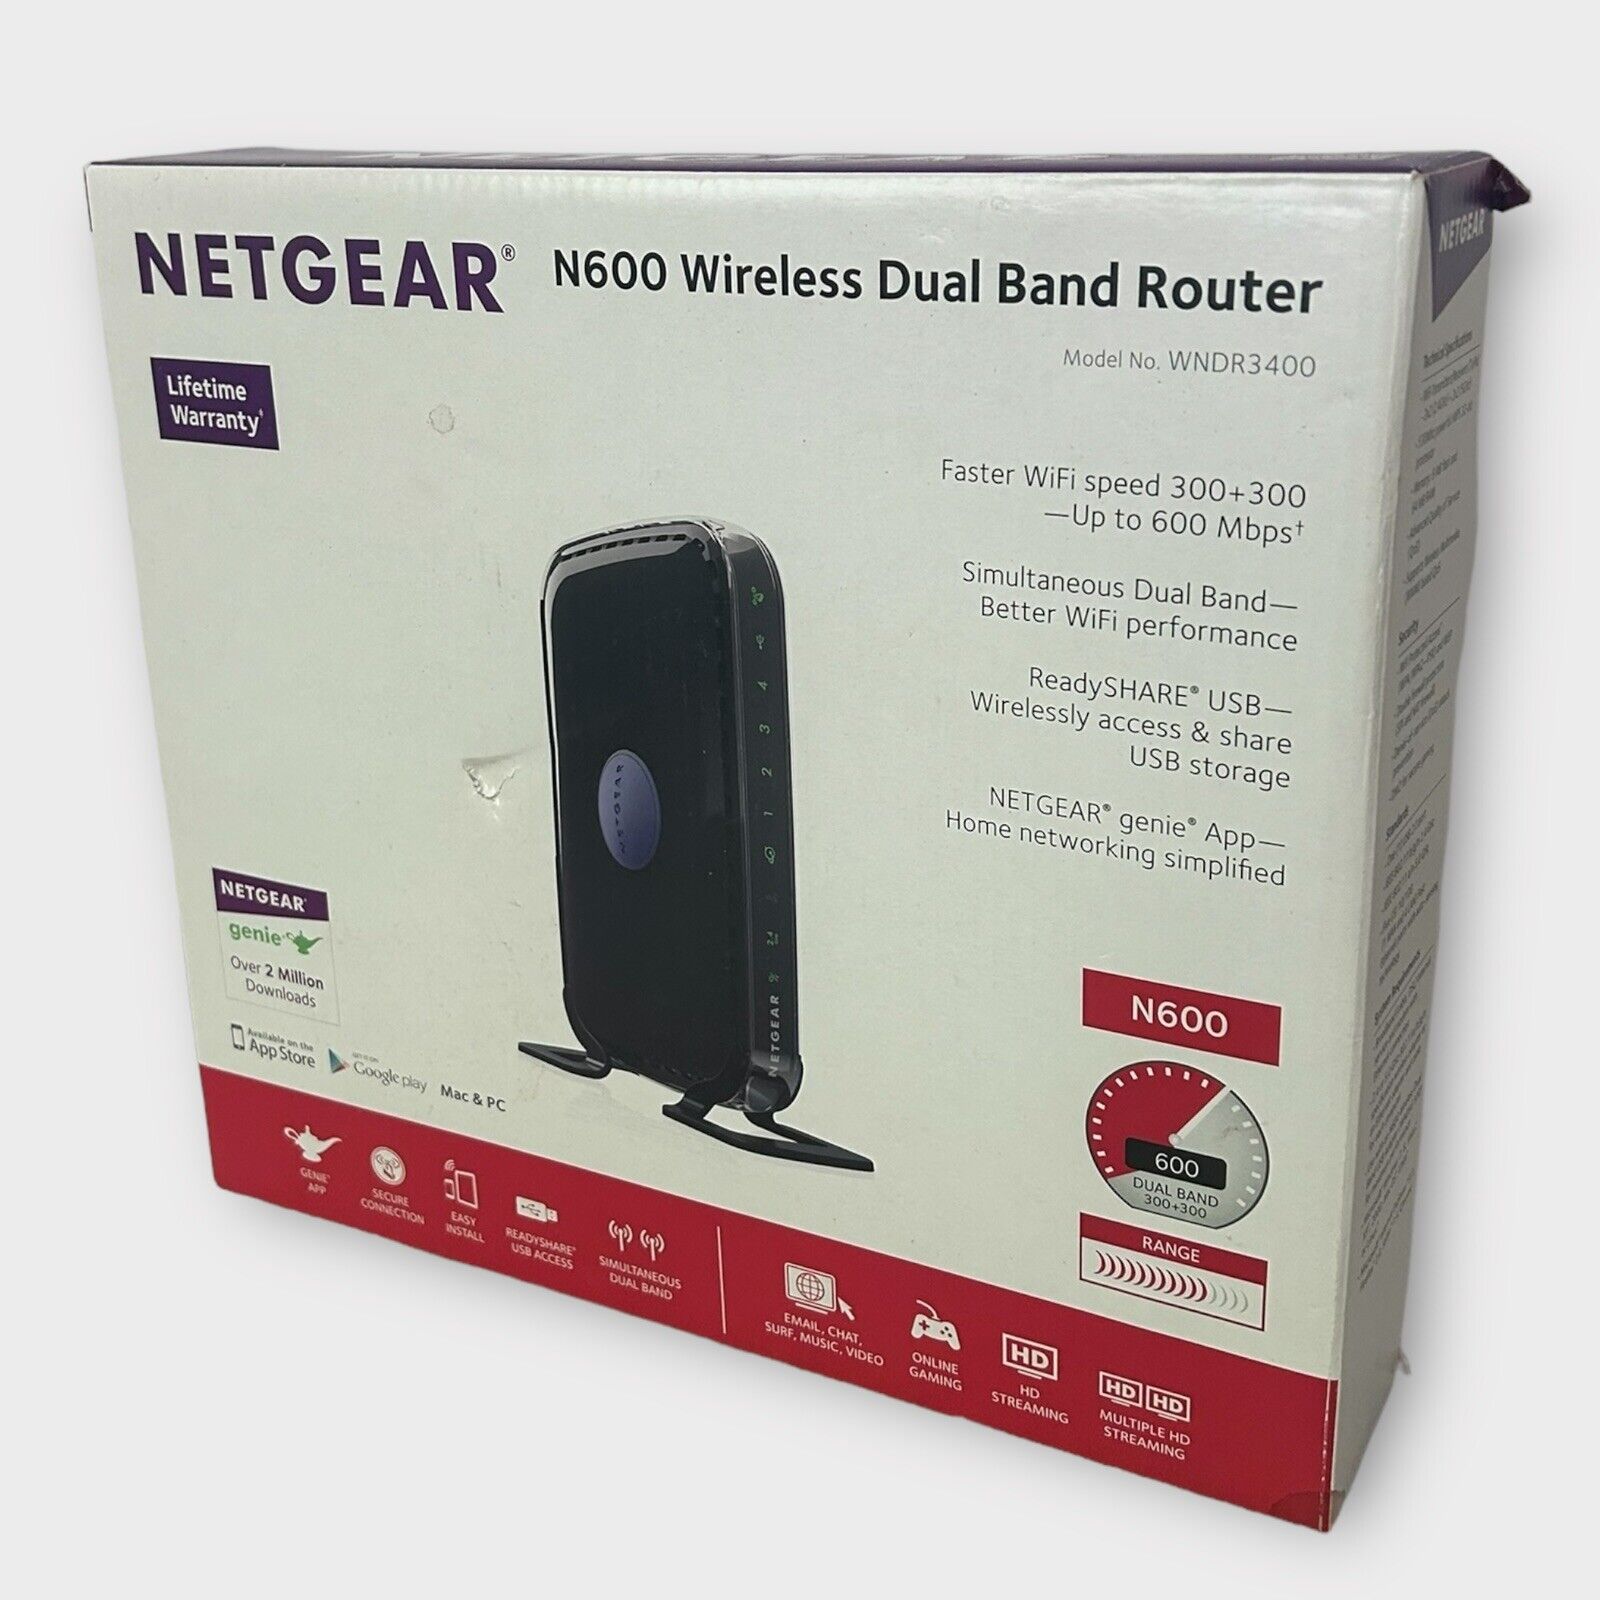 Netgear N600 Wi-Fi Router Wireless Dual Band Router WNDR3400 Open Box